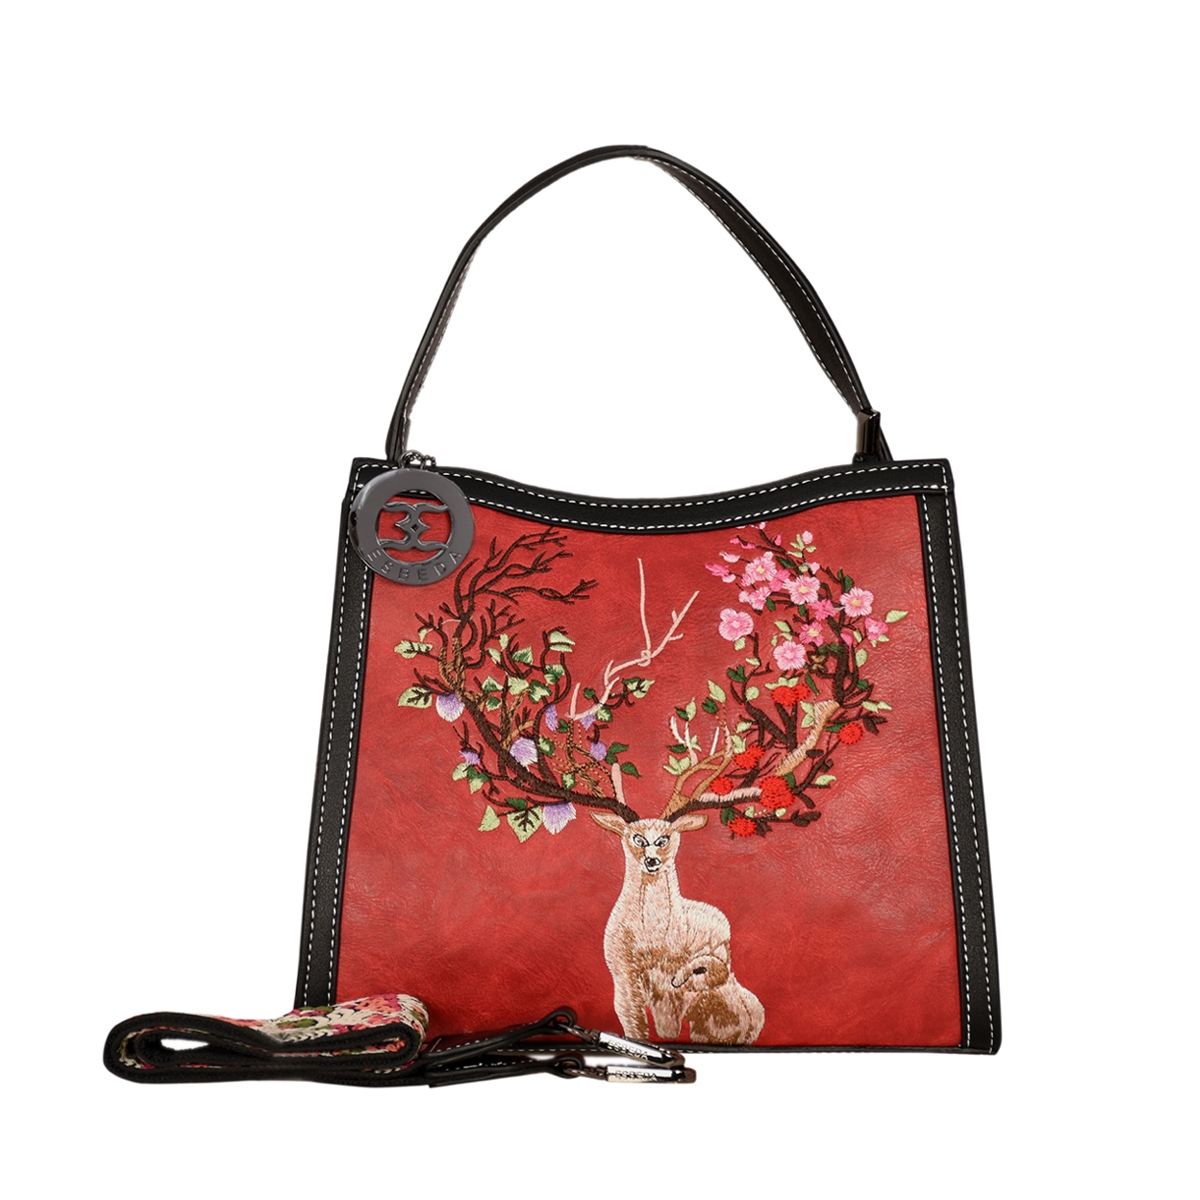 ESBEDA | ESBEDA Red Color Embroidery Dear Handbag For Womens 0